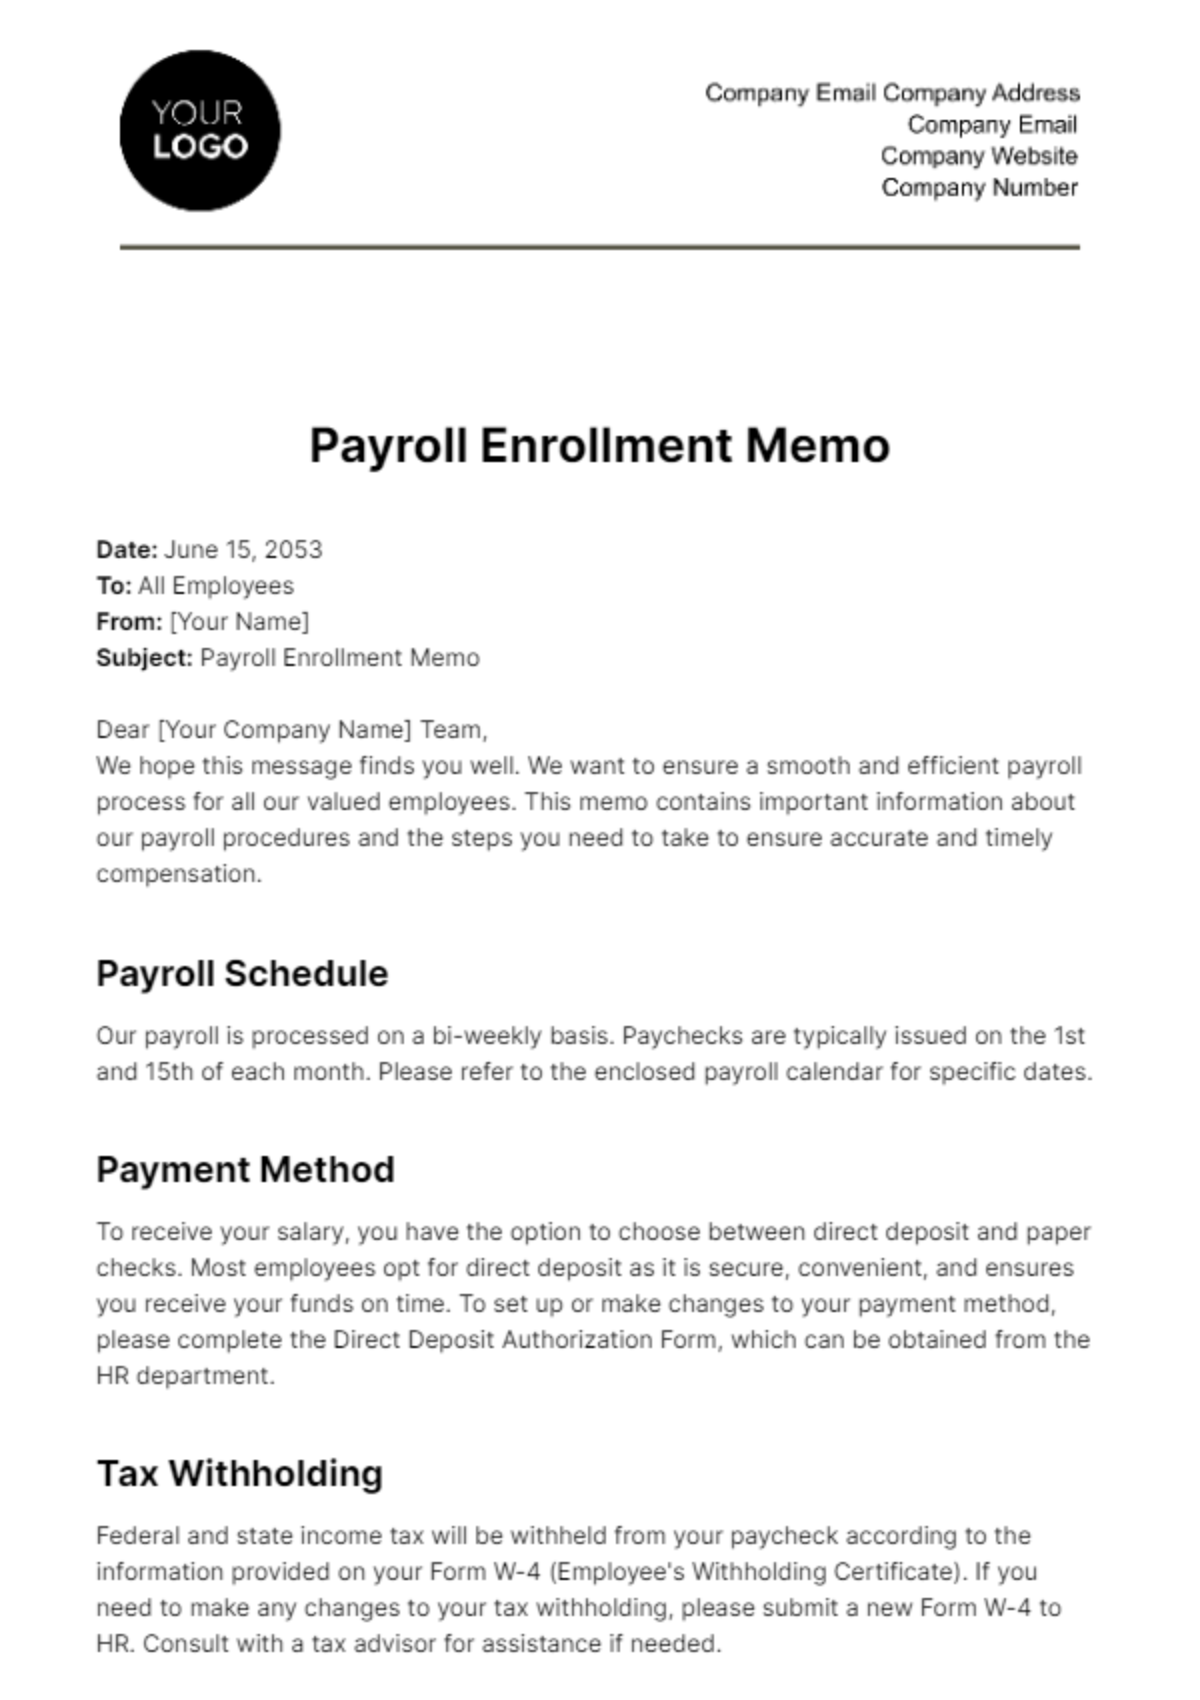 Free Payroll Enrollment Memo HR Template